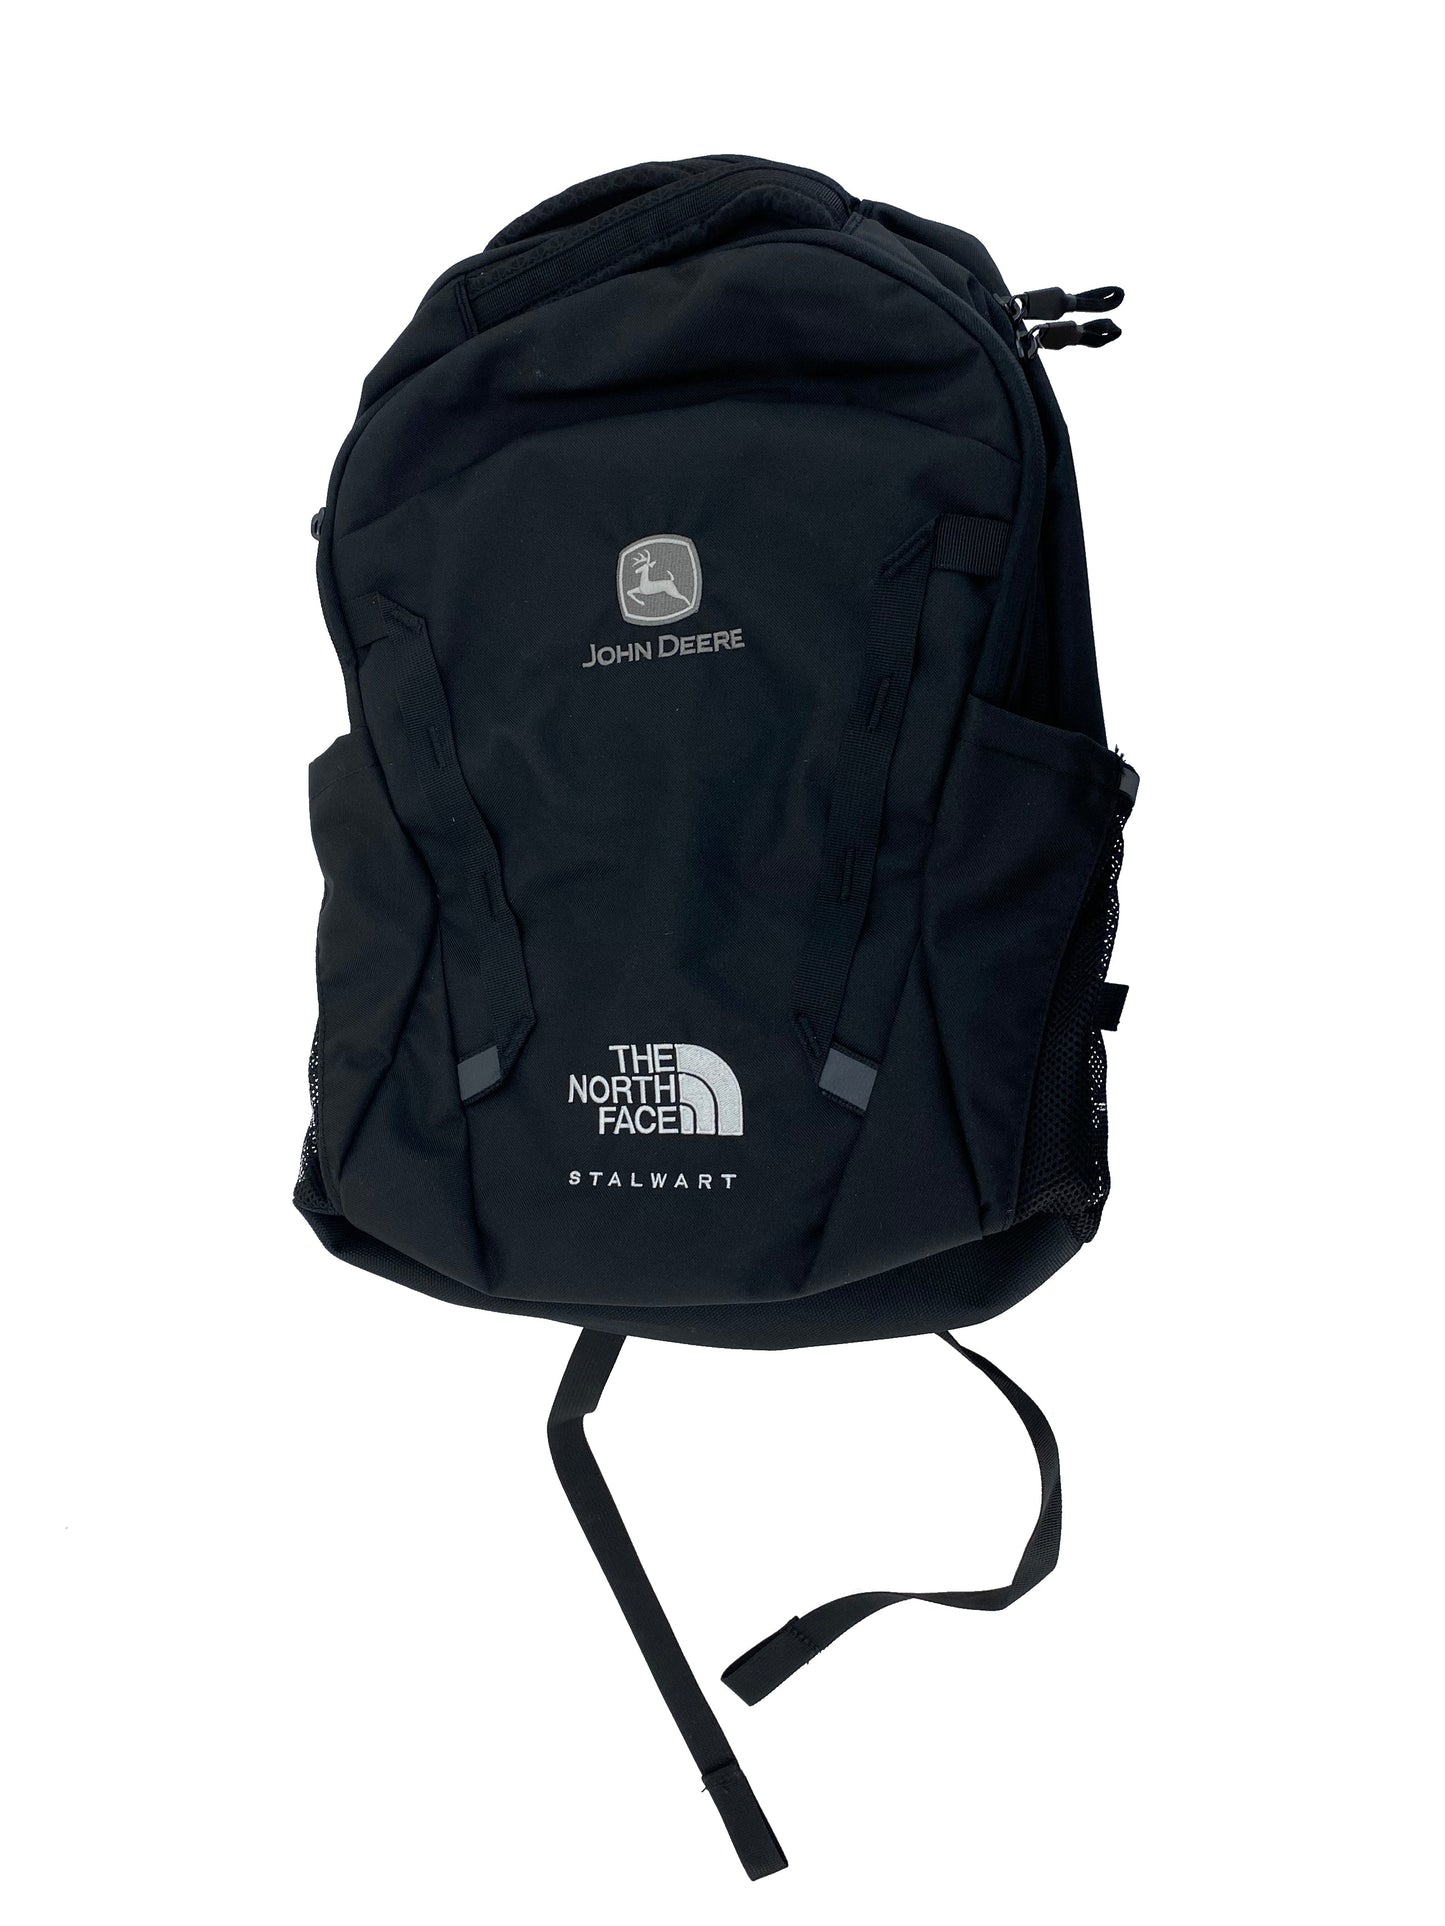 John Deere The North Face Backpack - LP83707